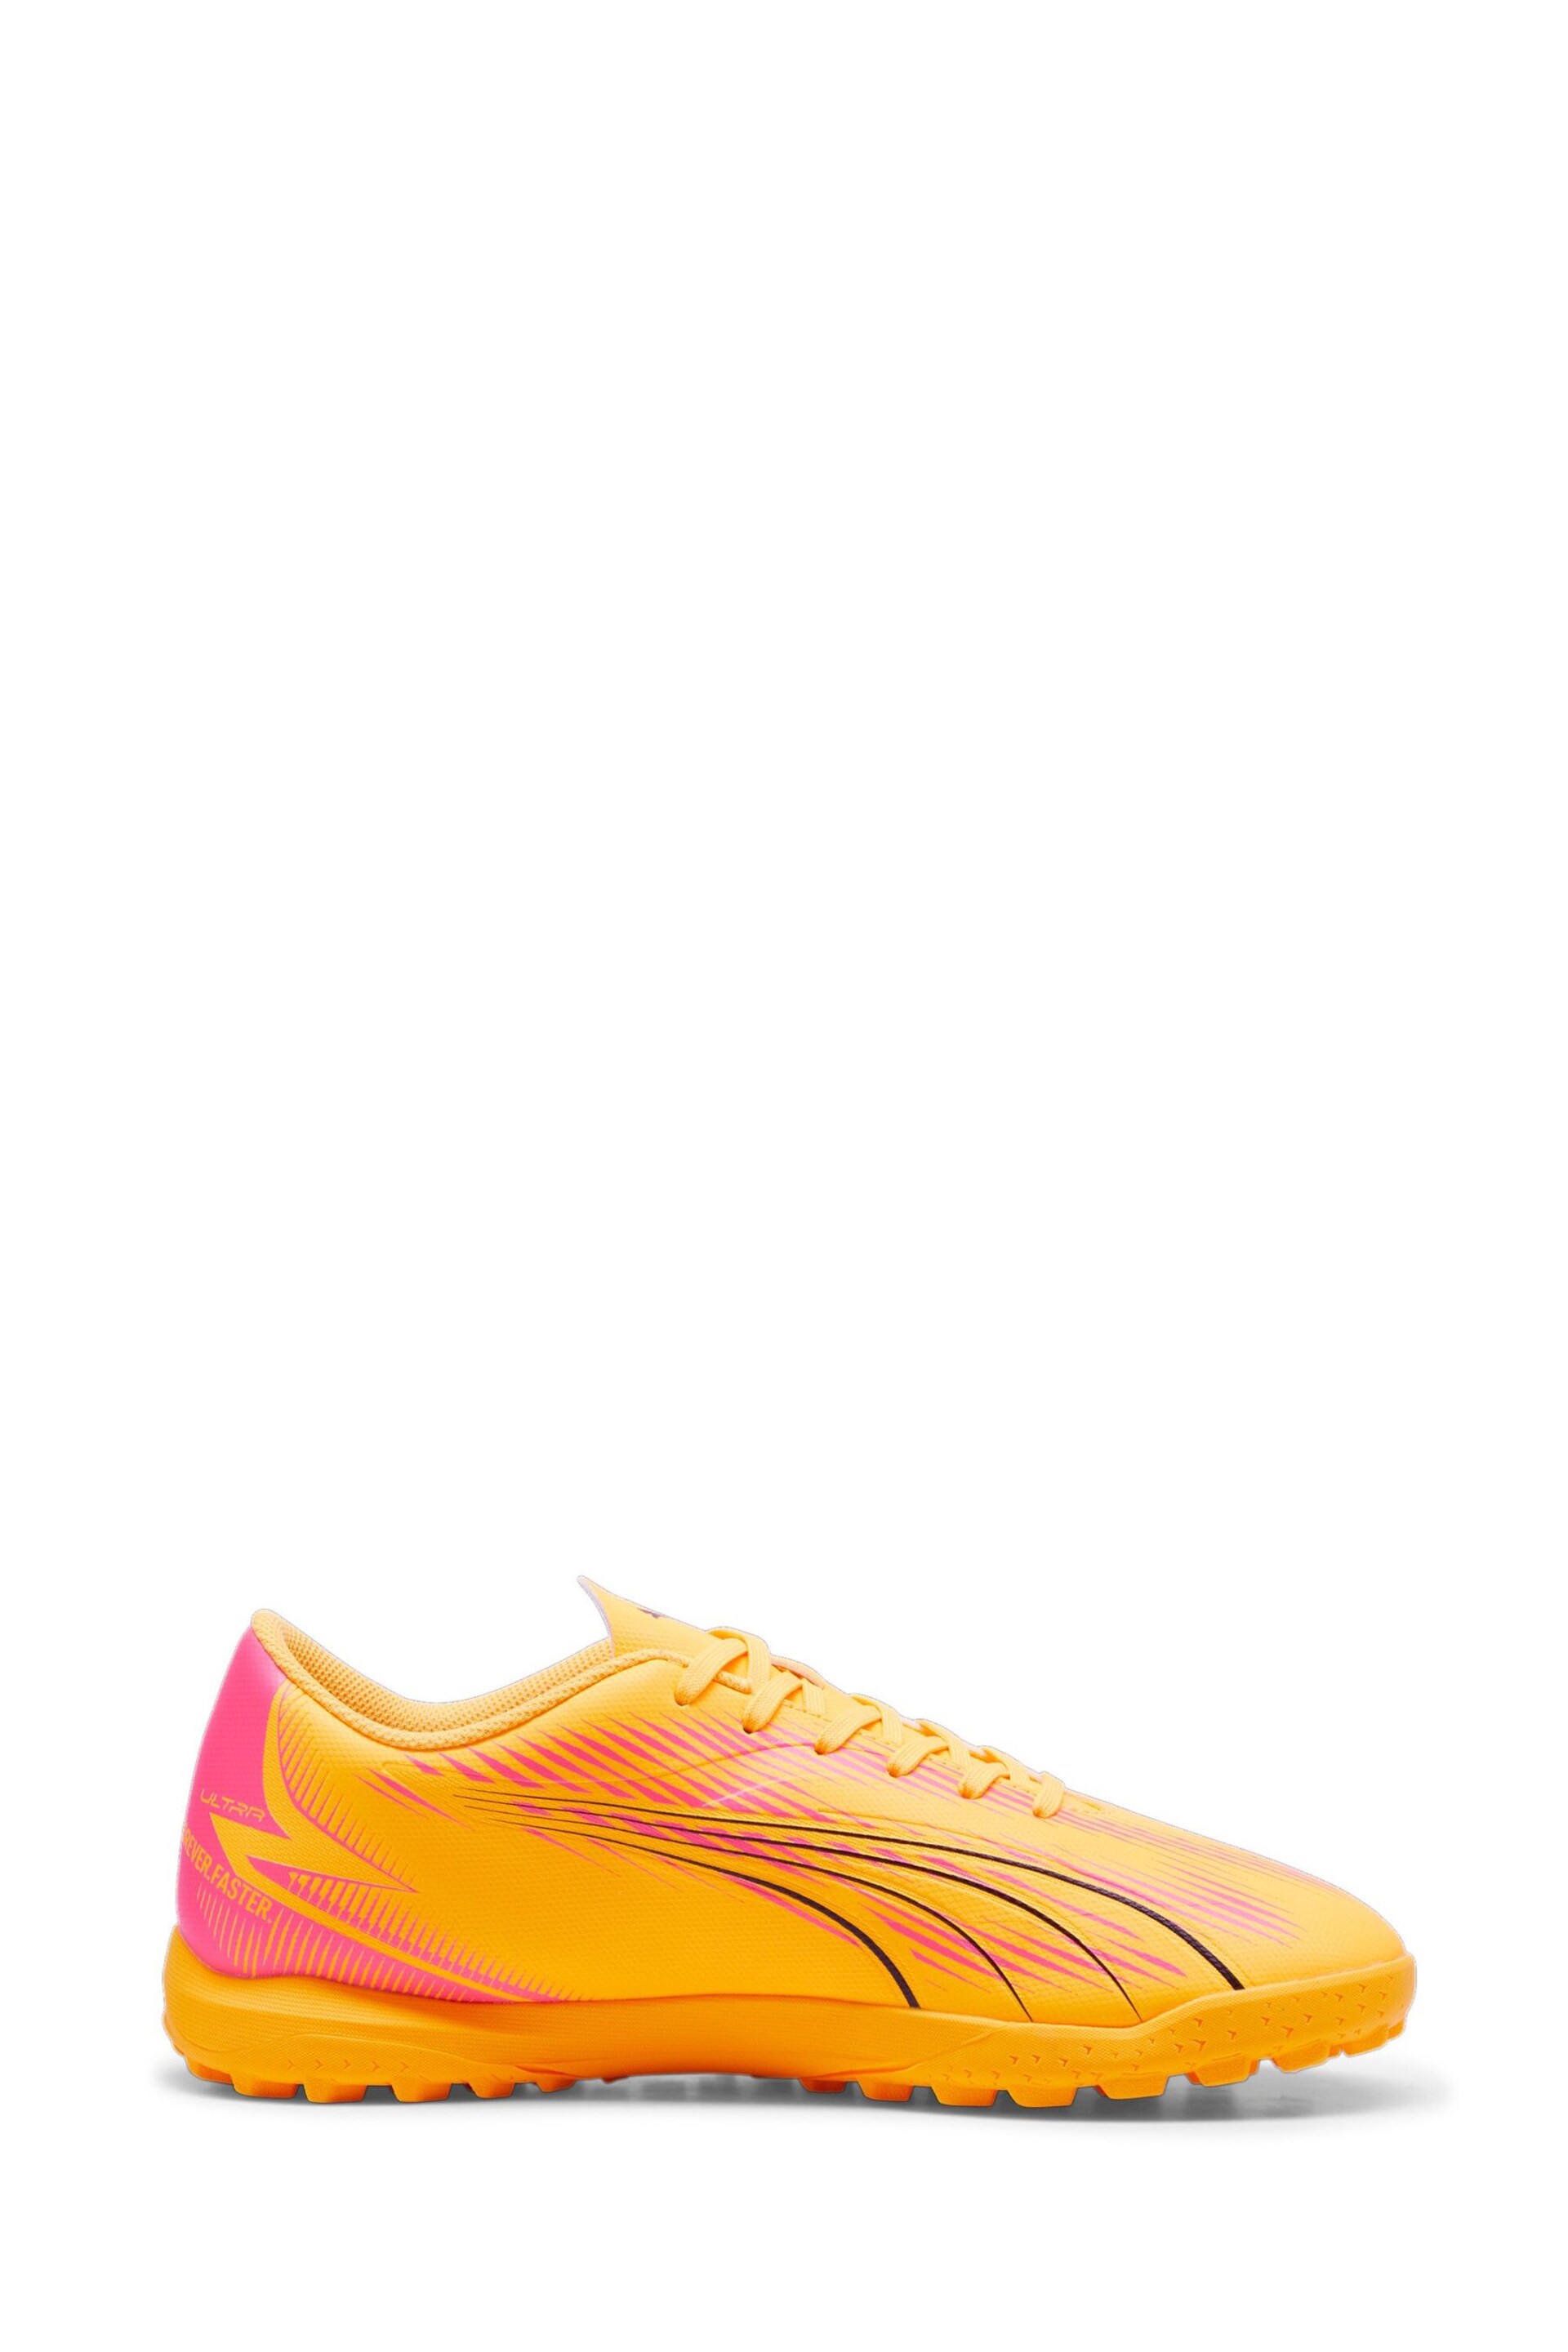 Puma Orange Mens Ultra Play TT Football Boots - Image 1 of 6